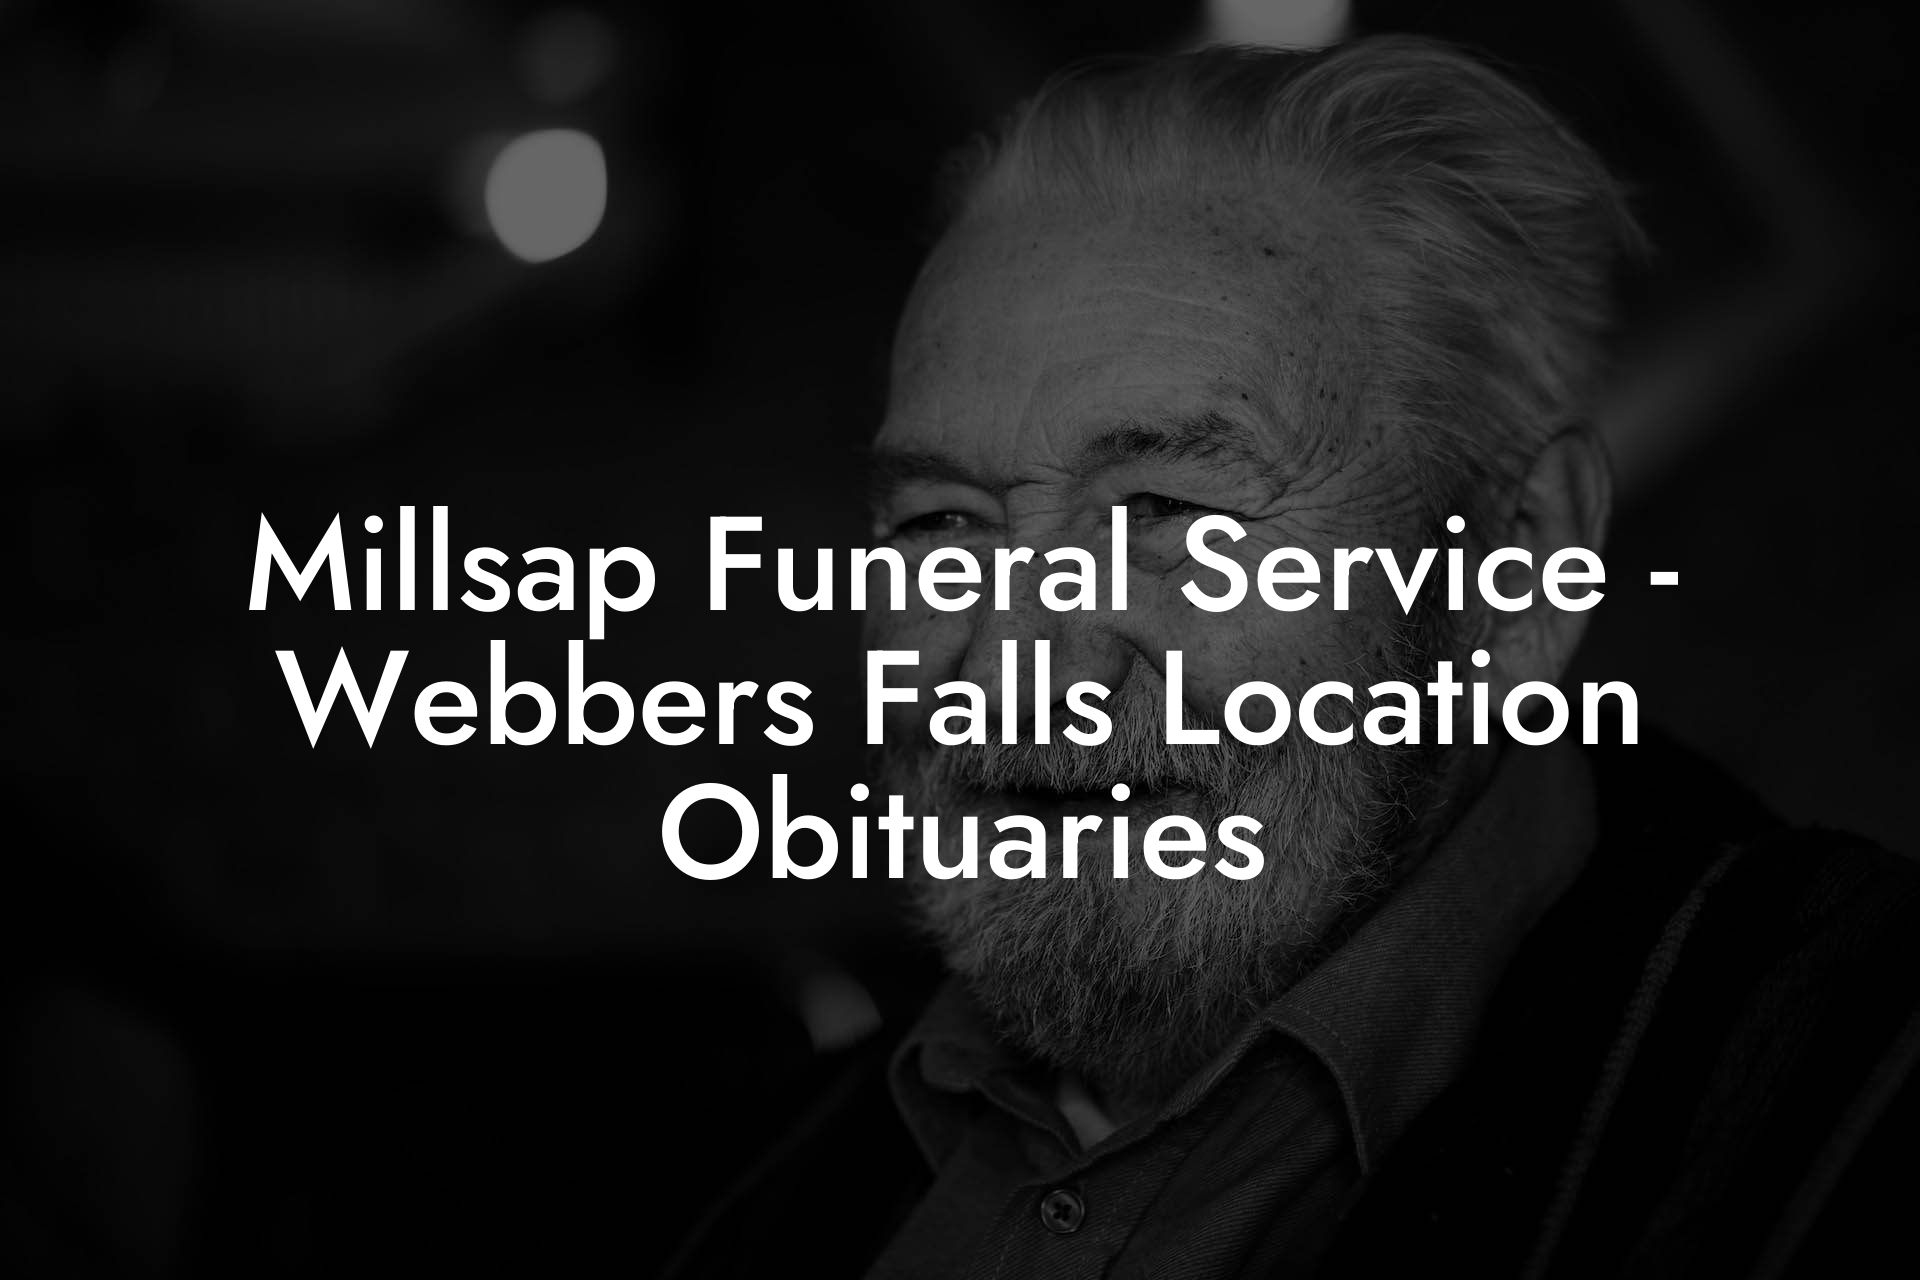 Millsap Funeral Service - Webbers Falls Location Obituaries